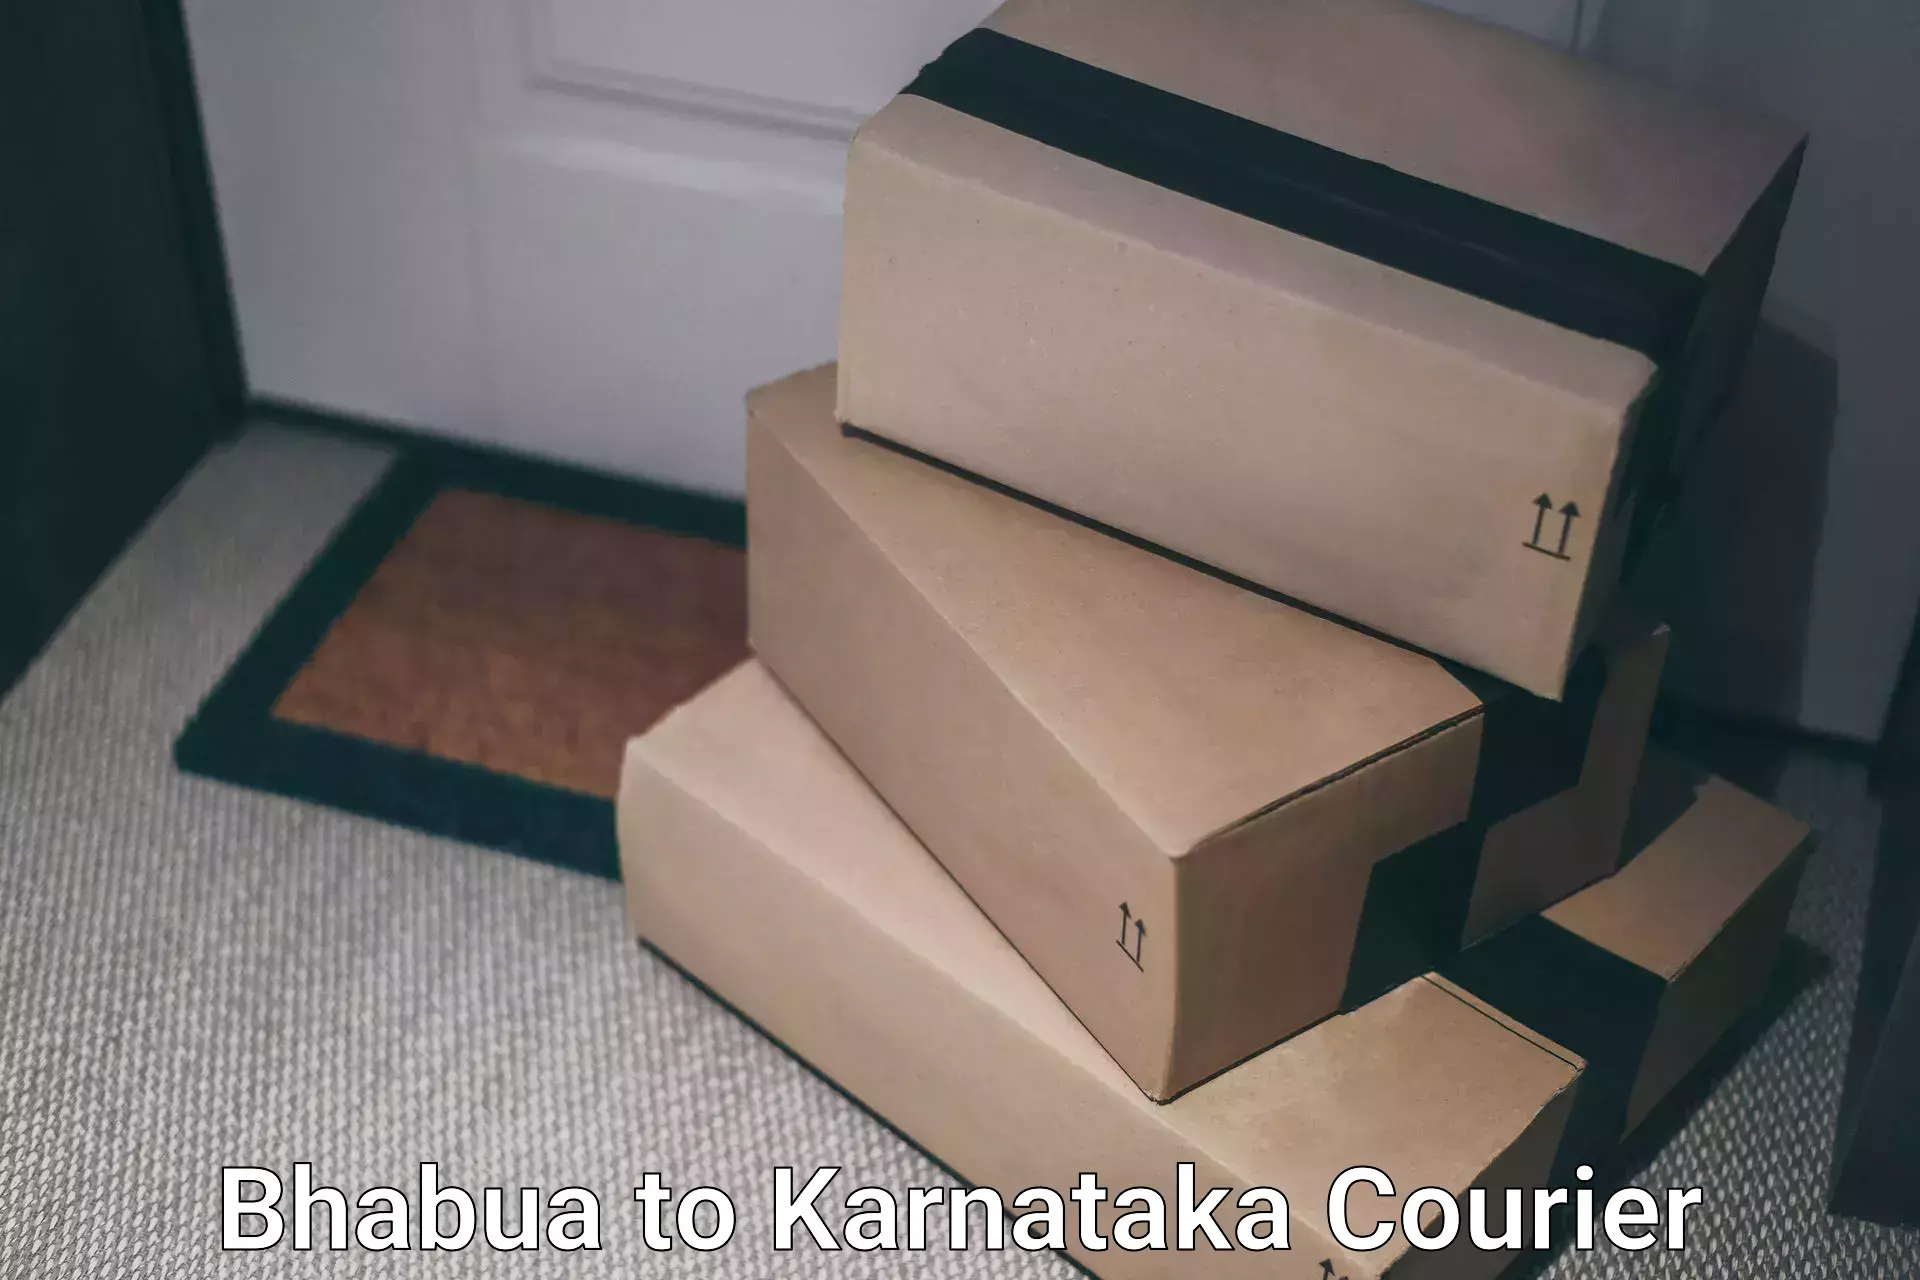 Courier service comparison Bhabua to Karnataka